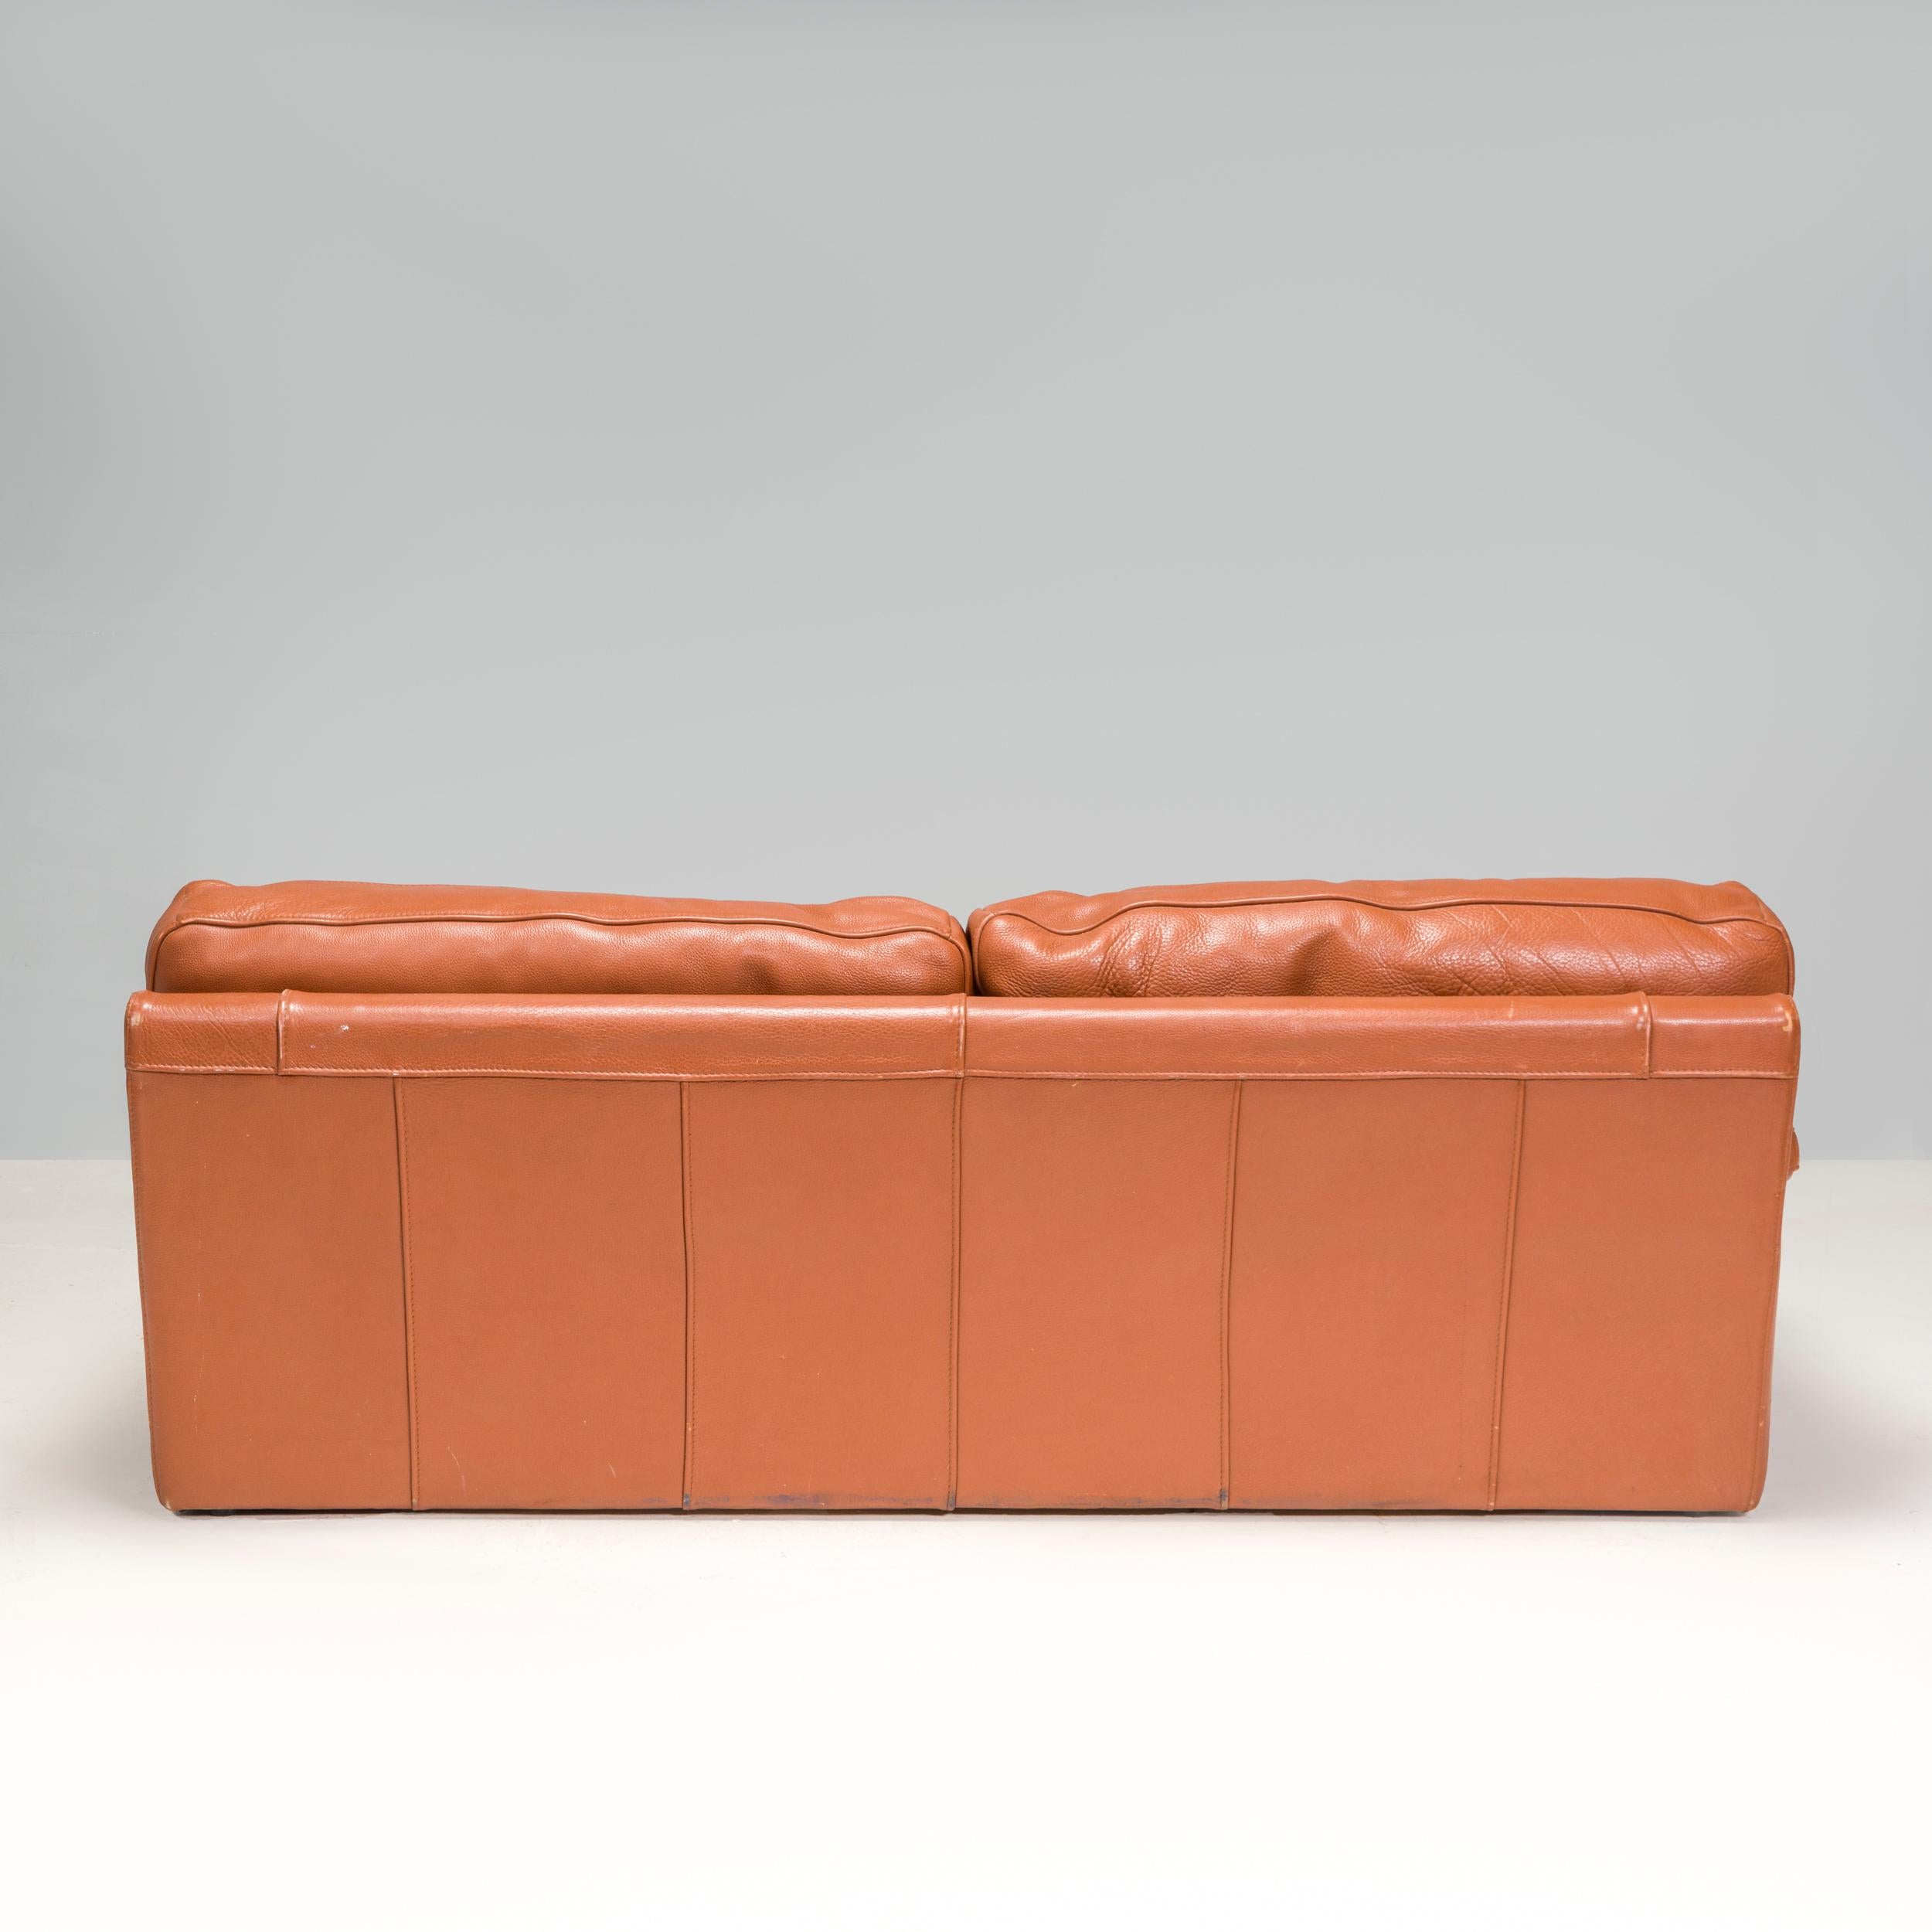 Late 20th Century Roche Bobois Brown Leather Sofa, Three Seater